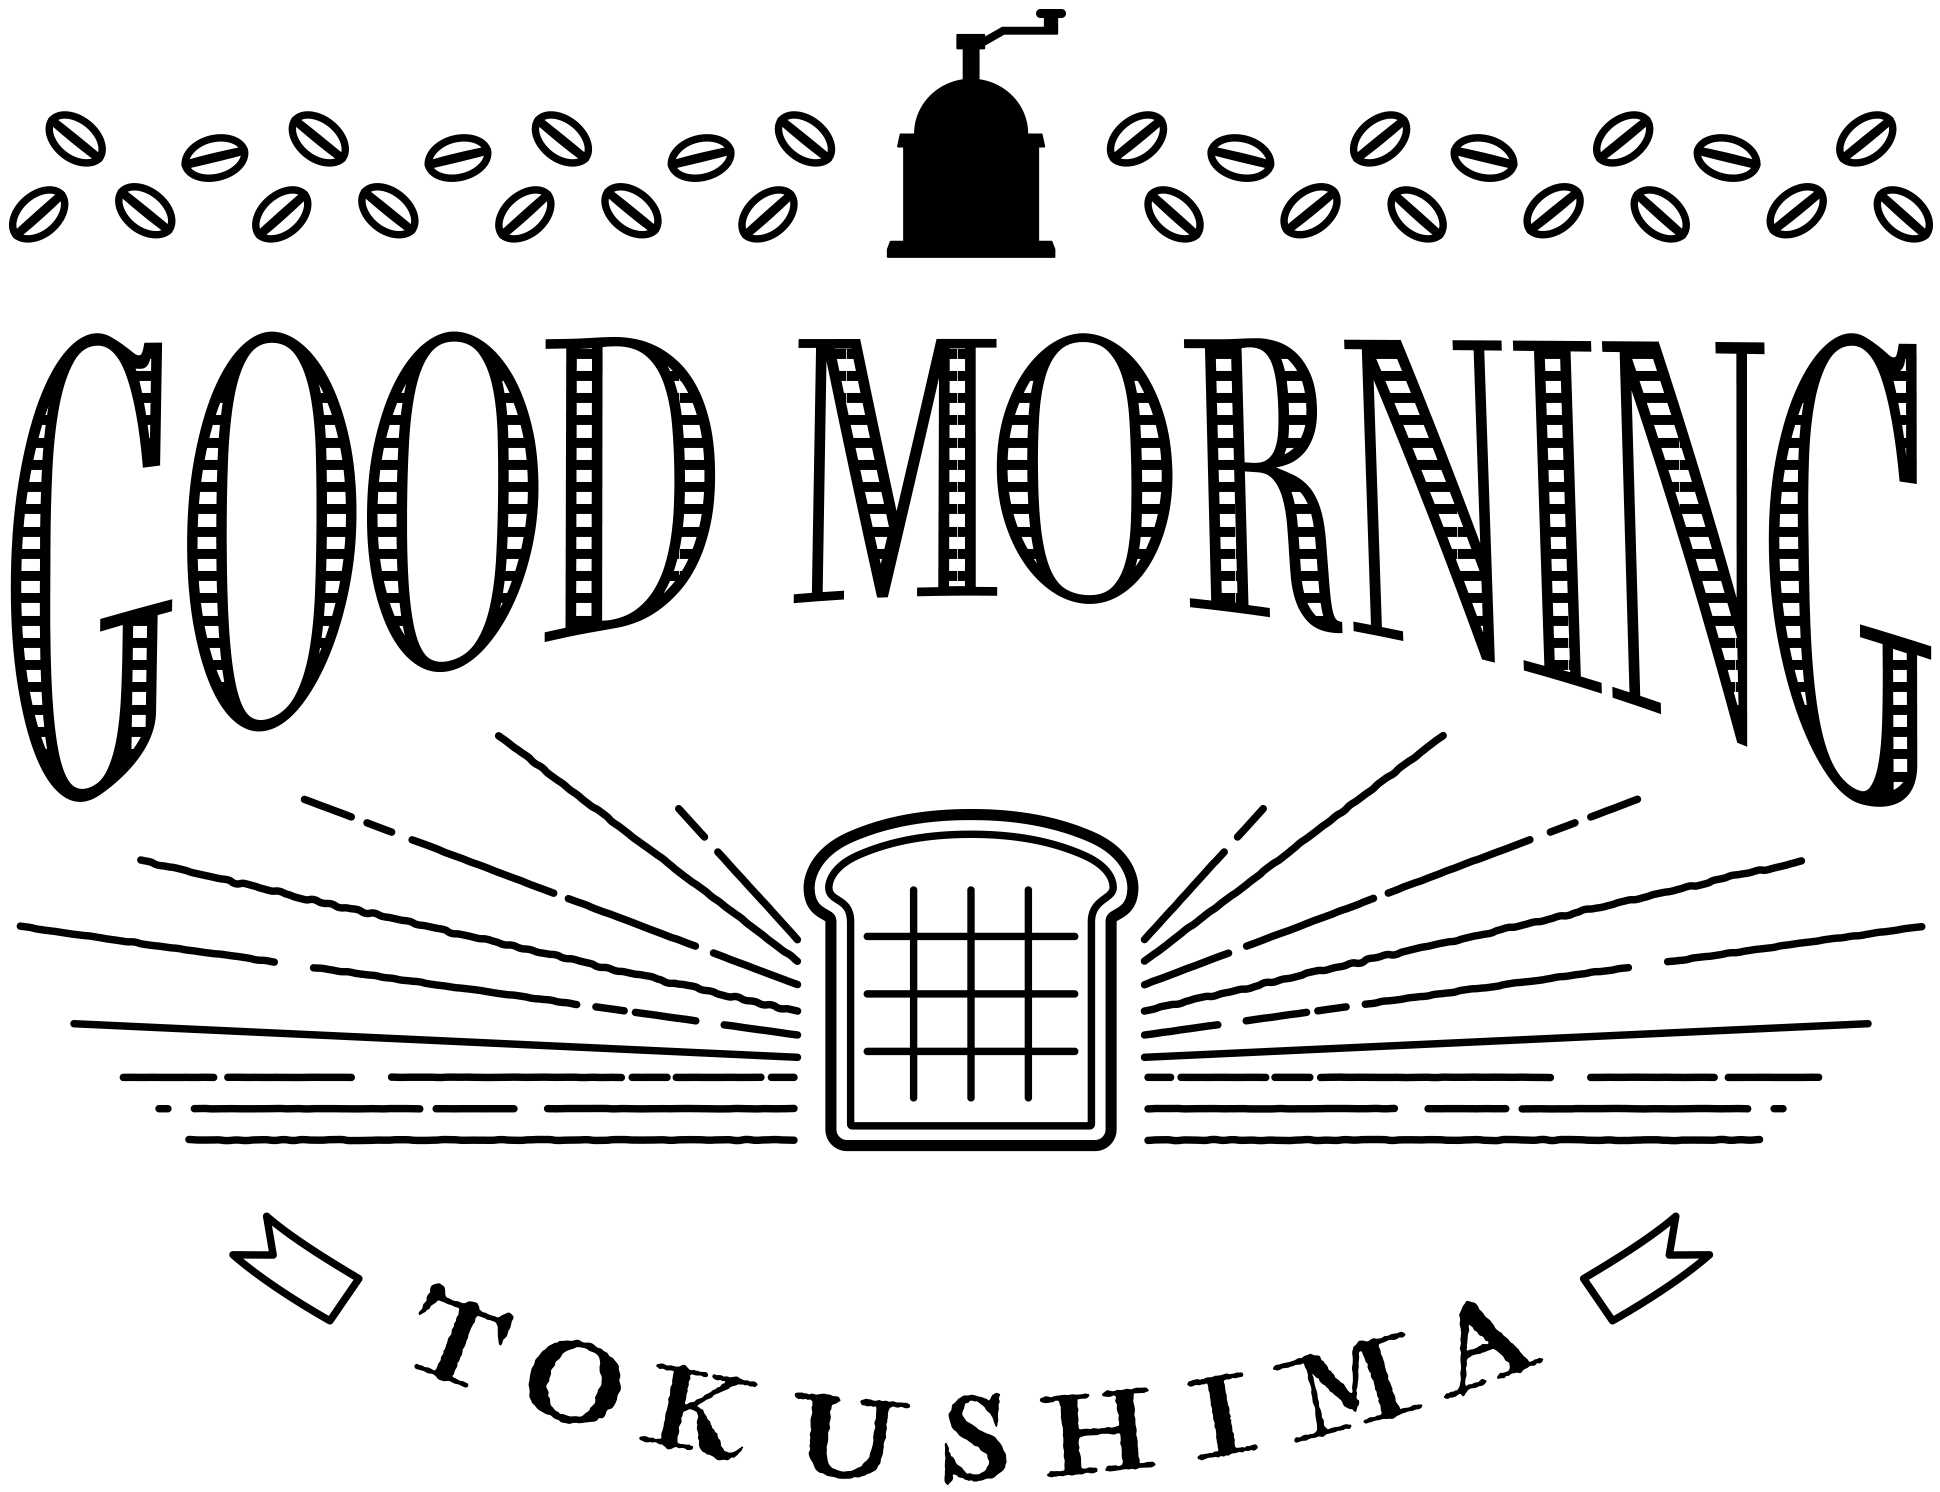 GOOD MORNING TOKUSHIMA